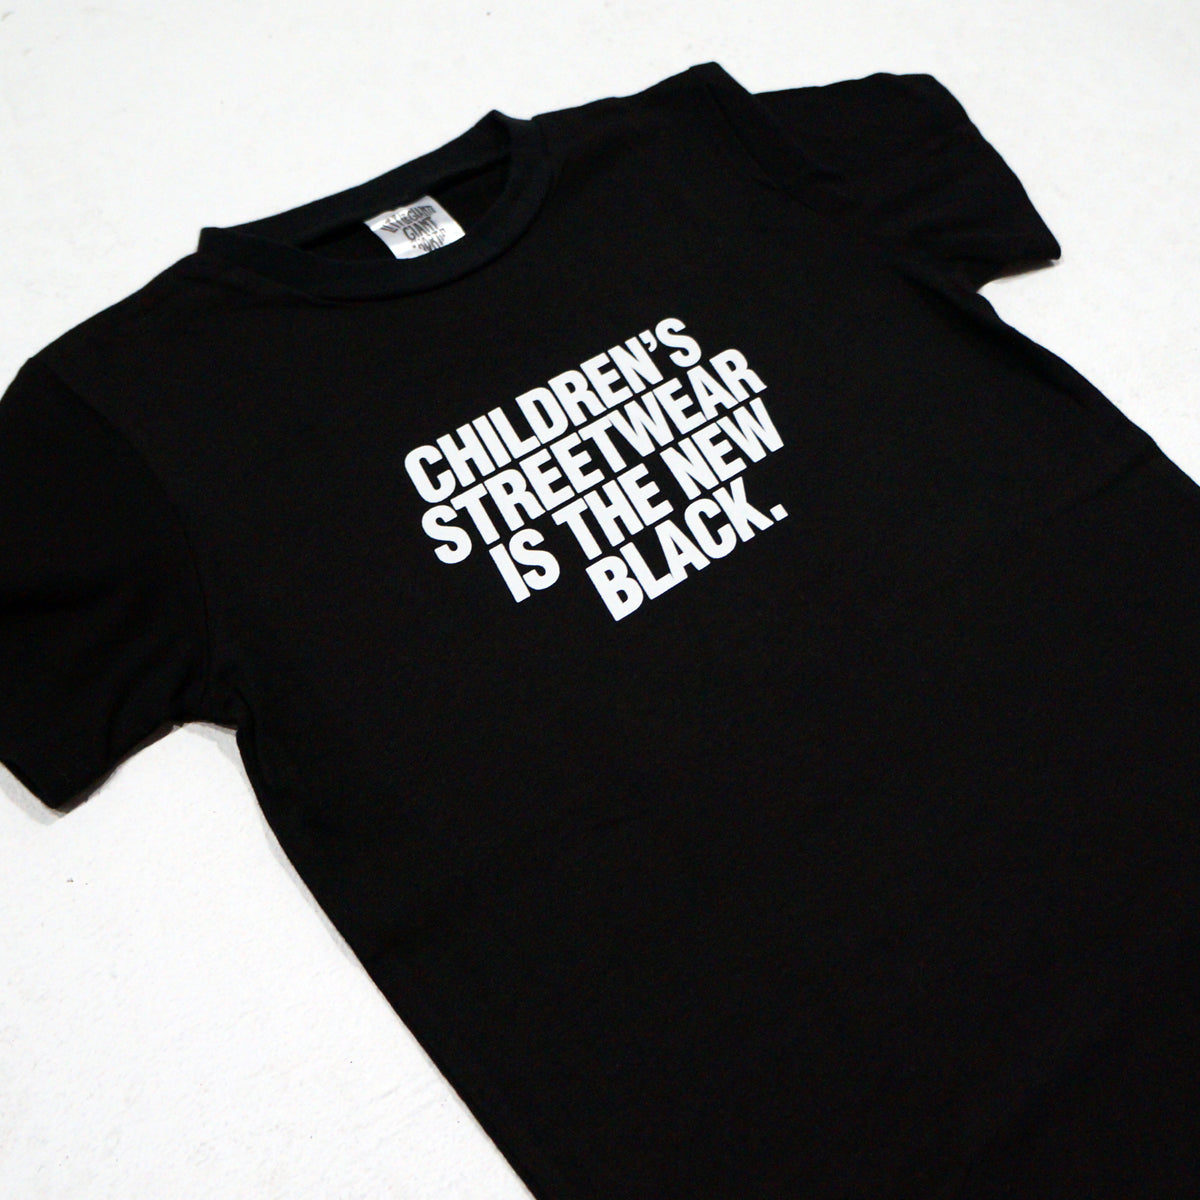 Children's Streetwear T-shirt (Black)